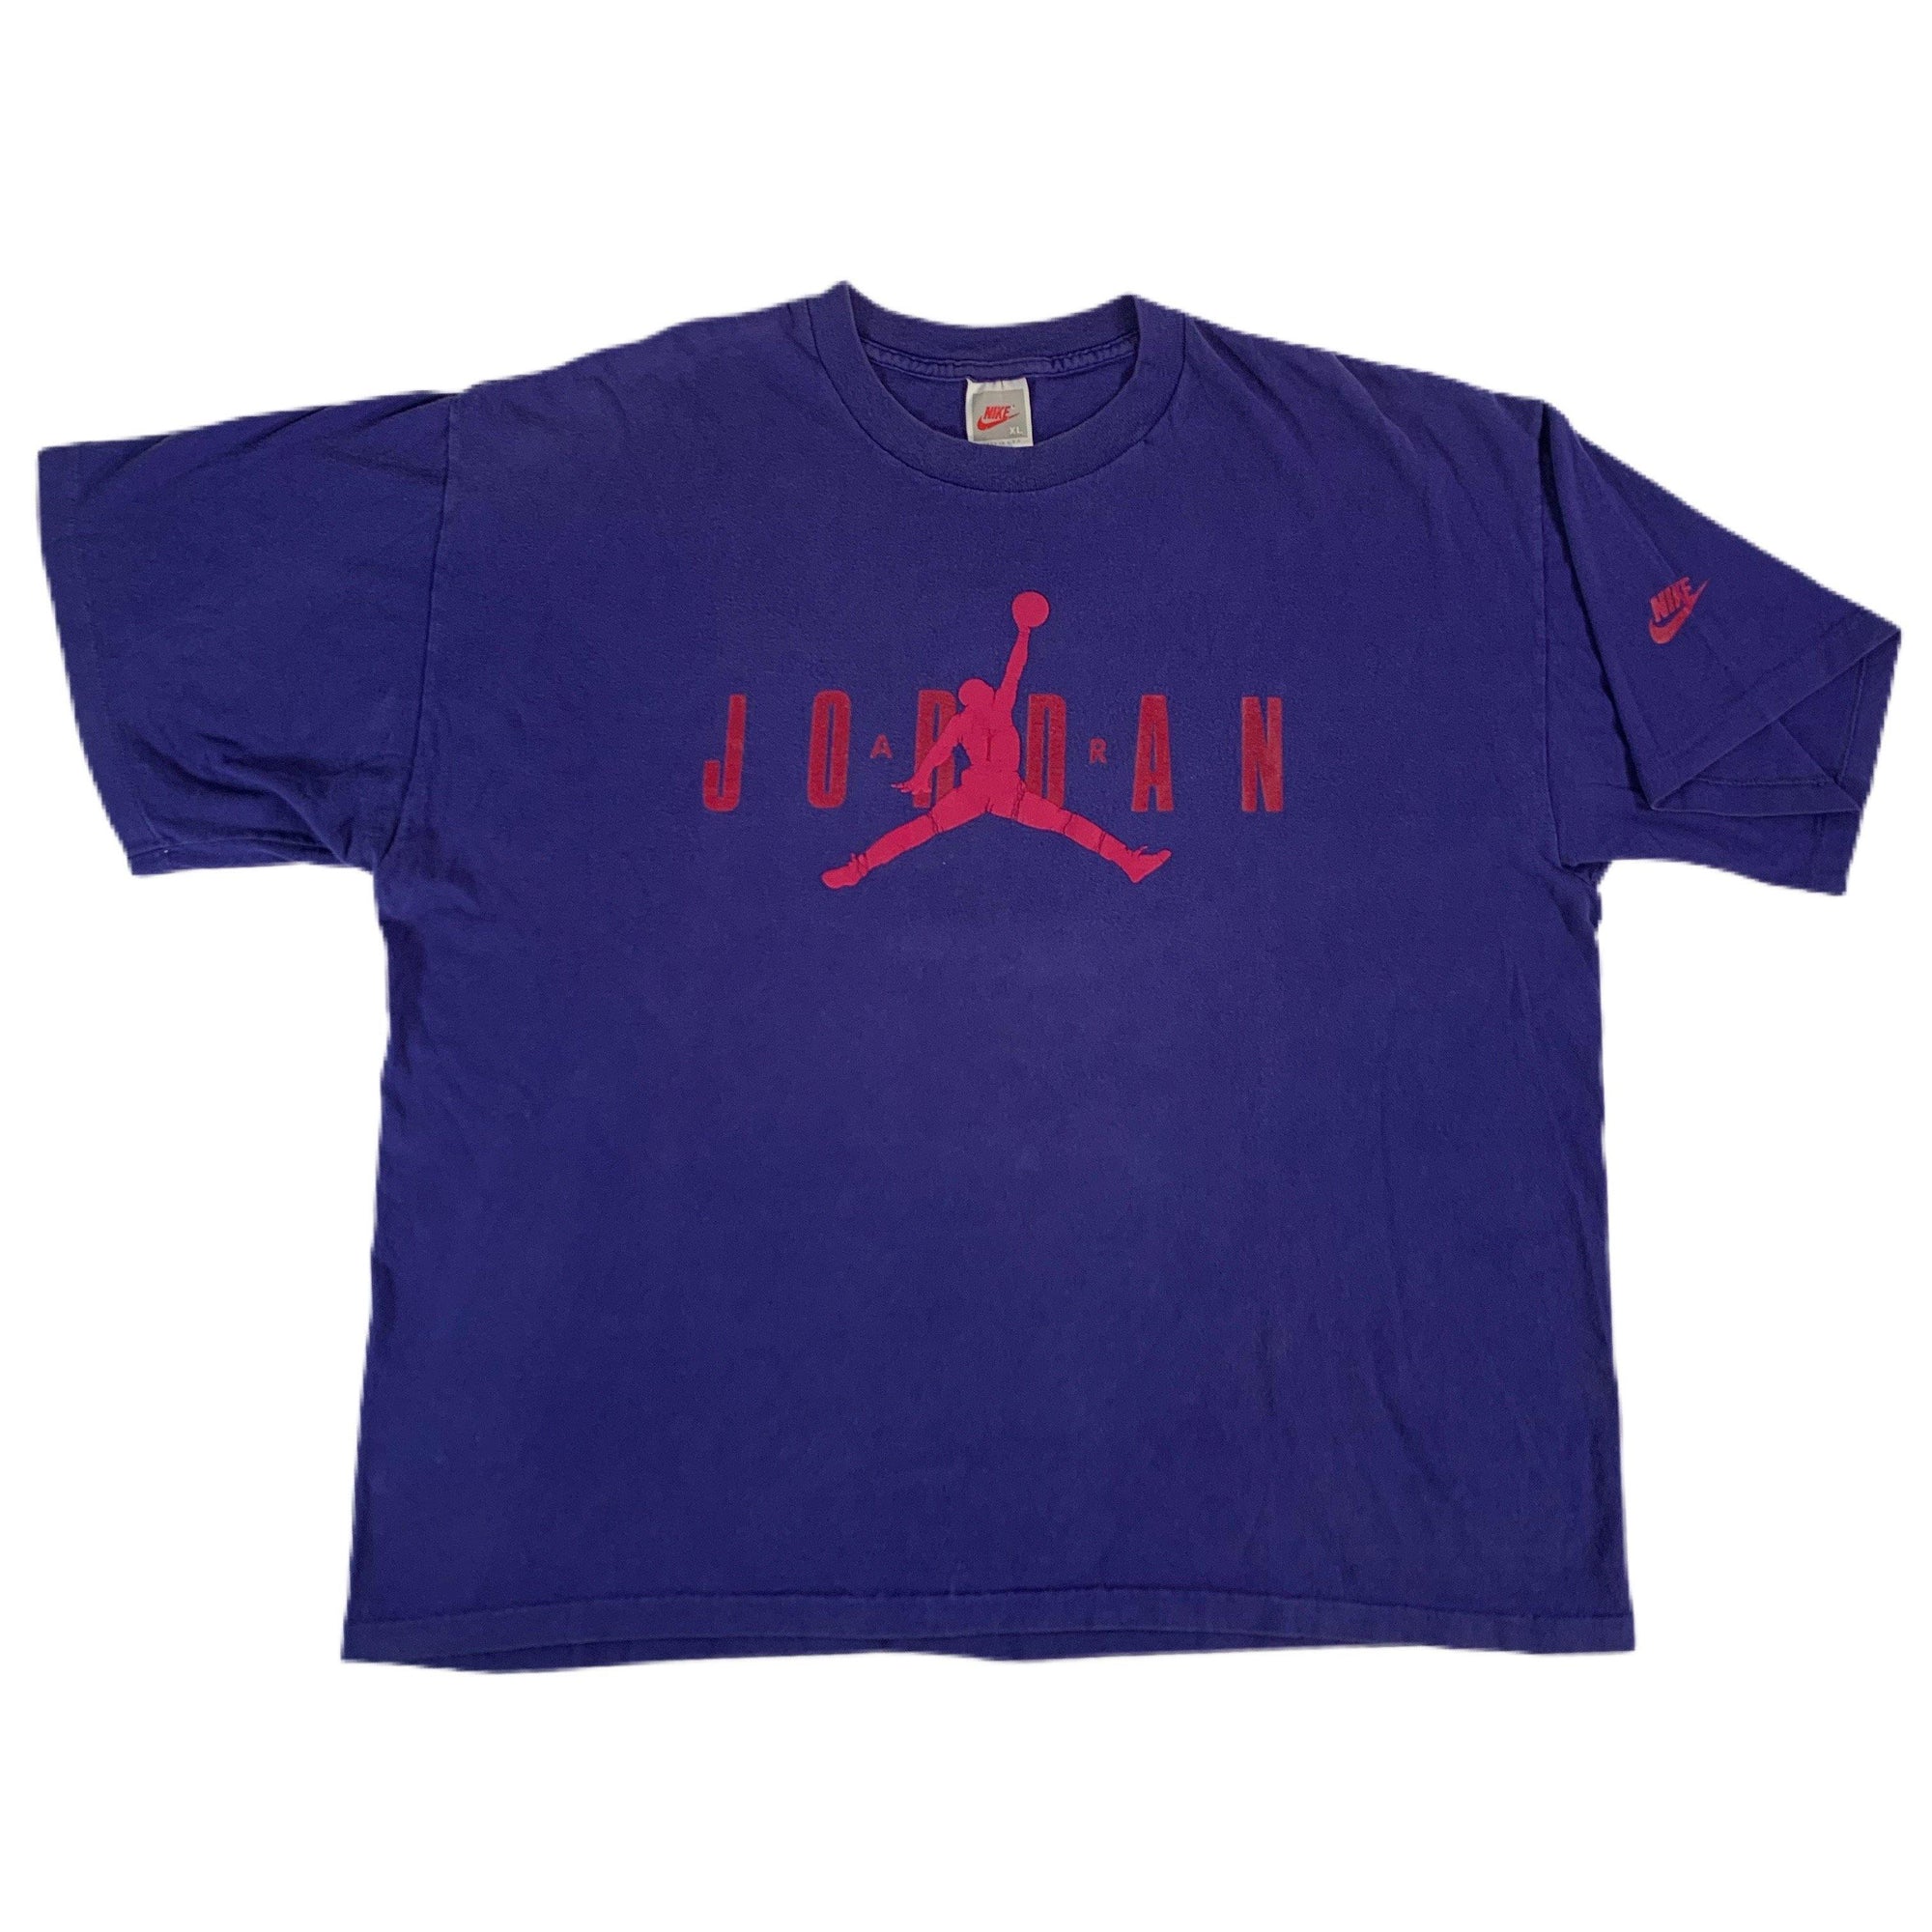 Vintage Nike "Air Jordan" T-Shirt - jointcustodydc